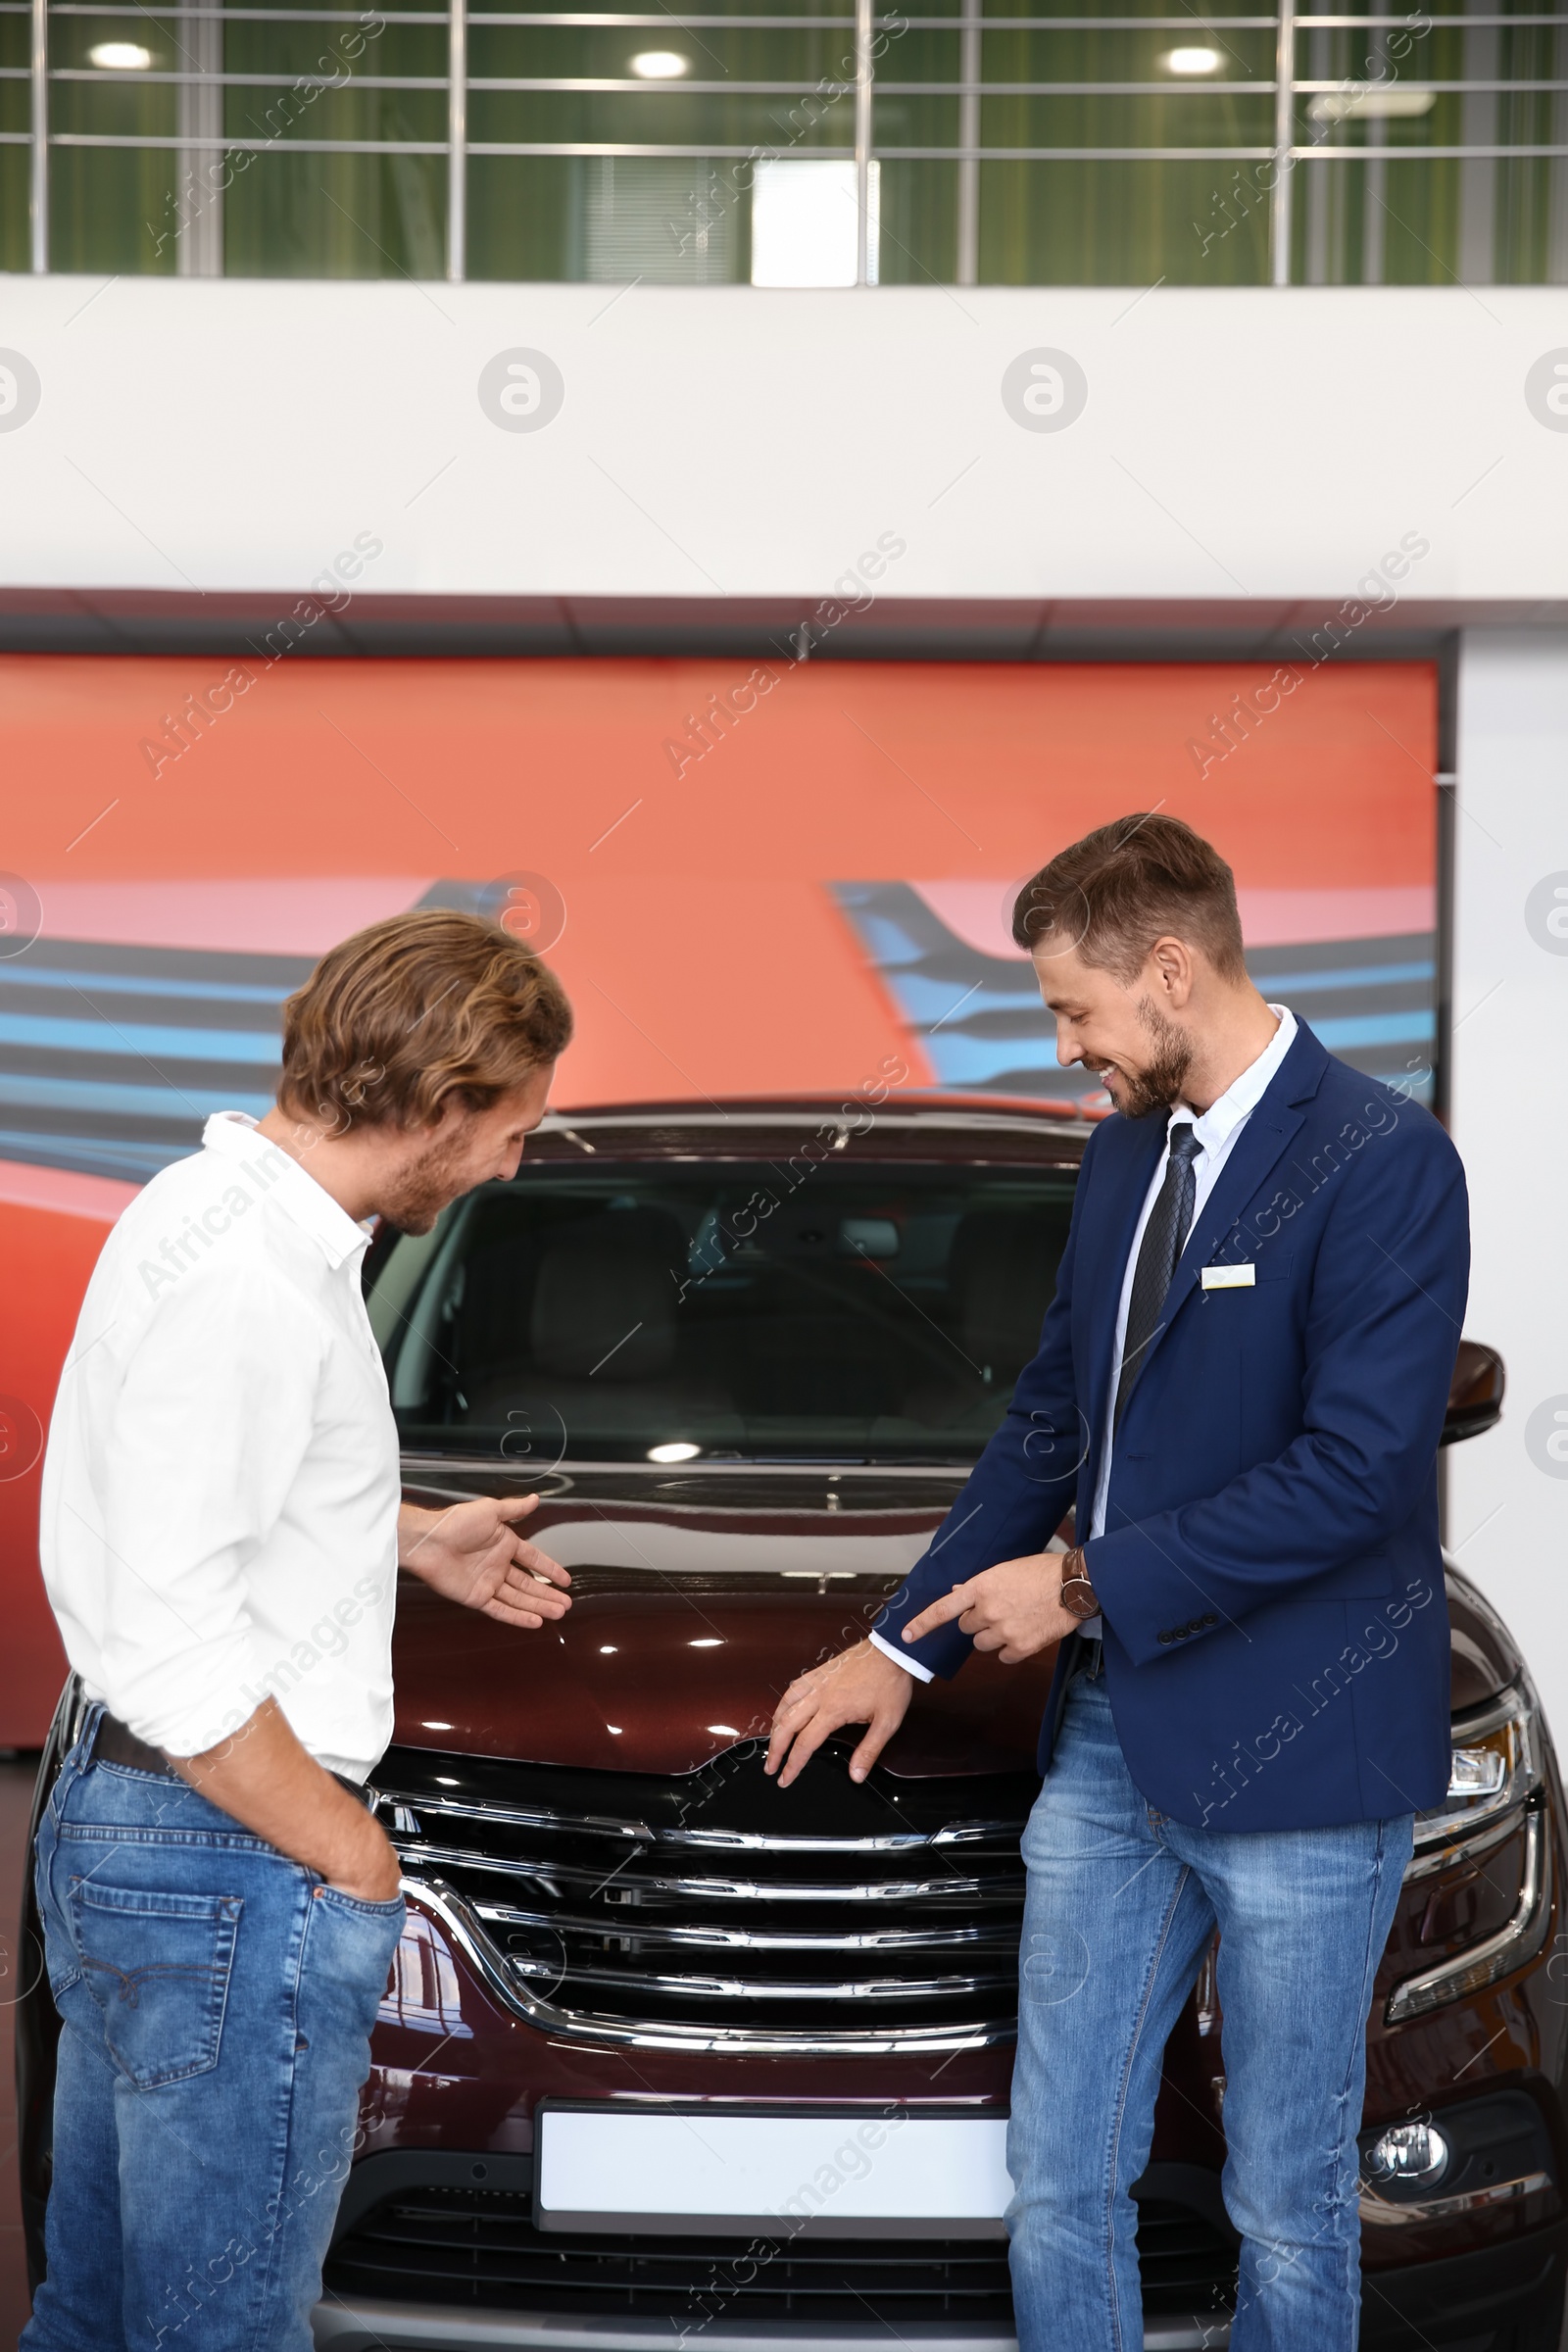 Photo of Salesman with customer in modern car dealership